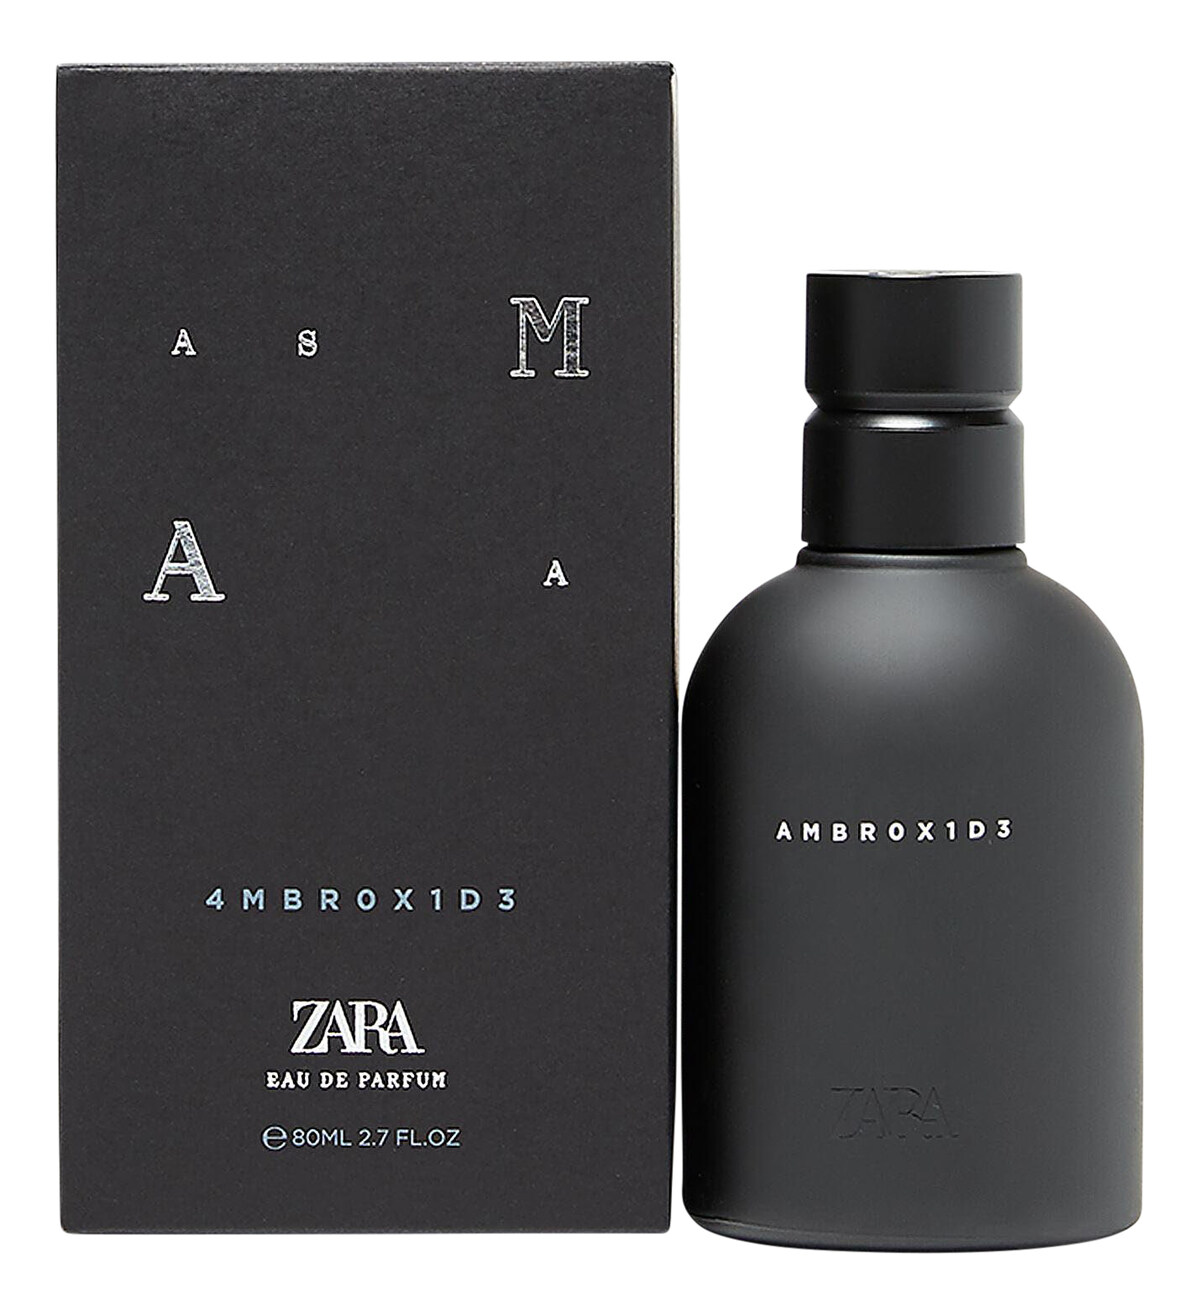 zara winter collection perfume